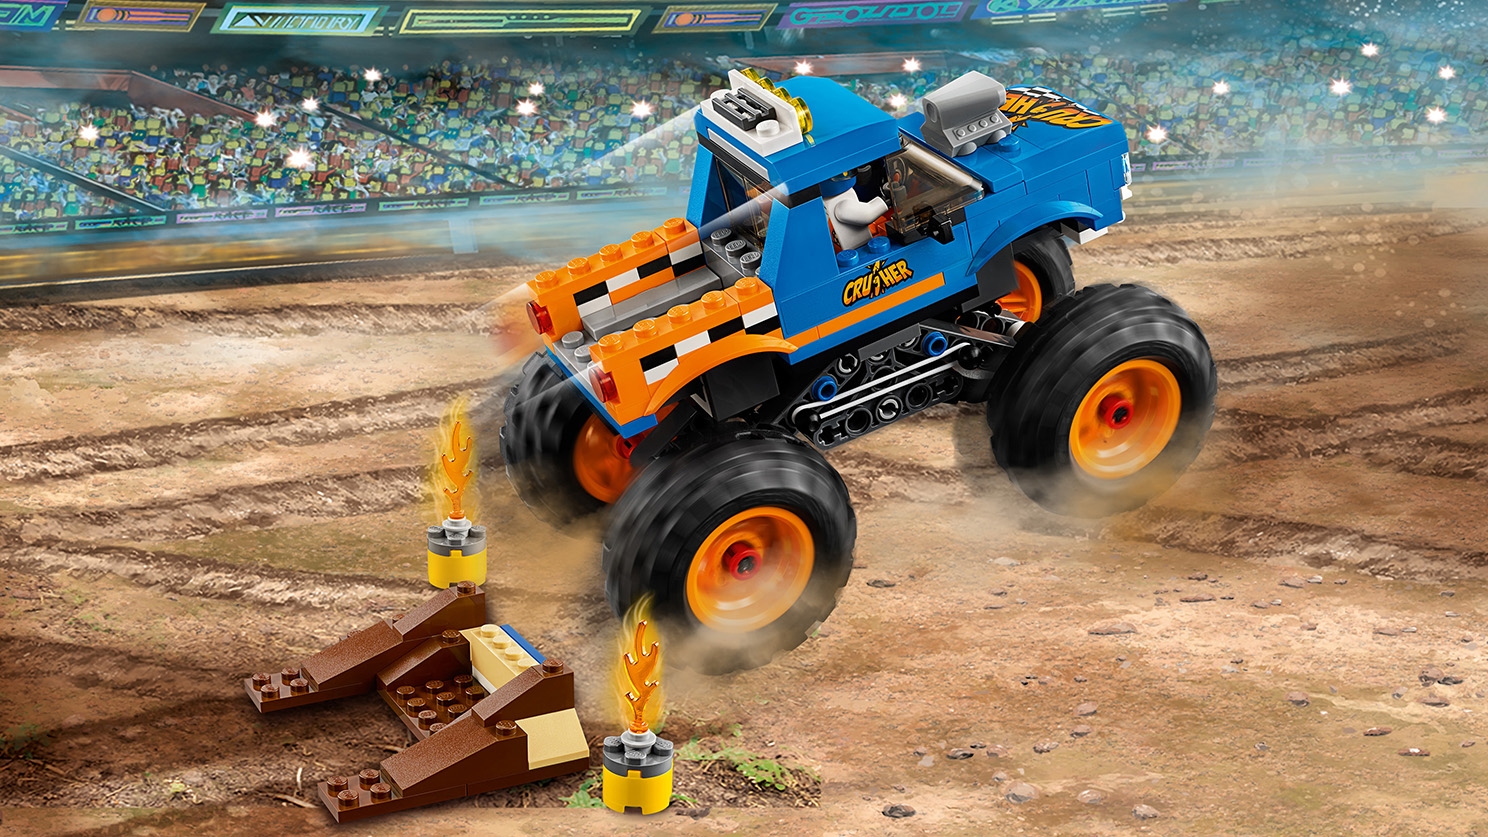 Monster Truck - LEGO® City Sets - LEGO.com for kids